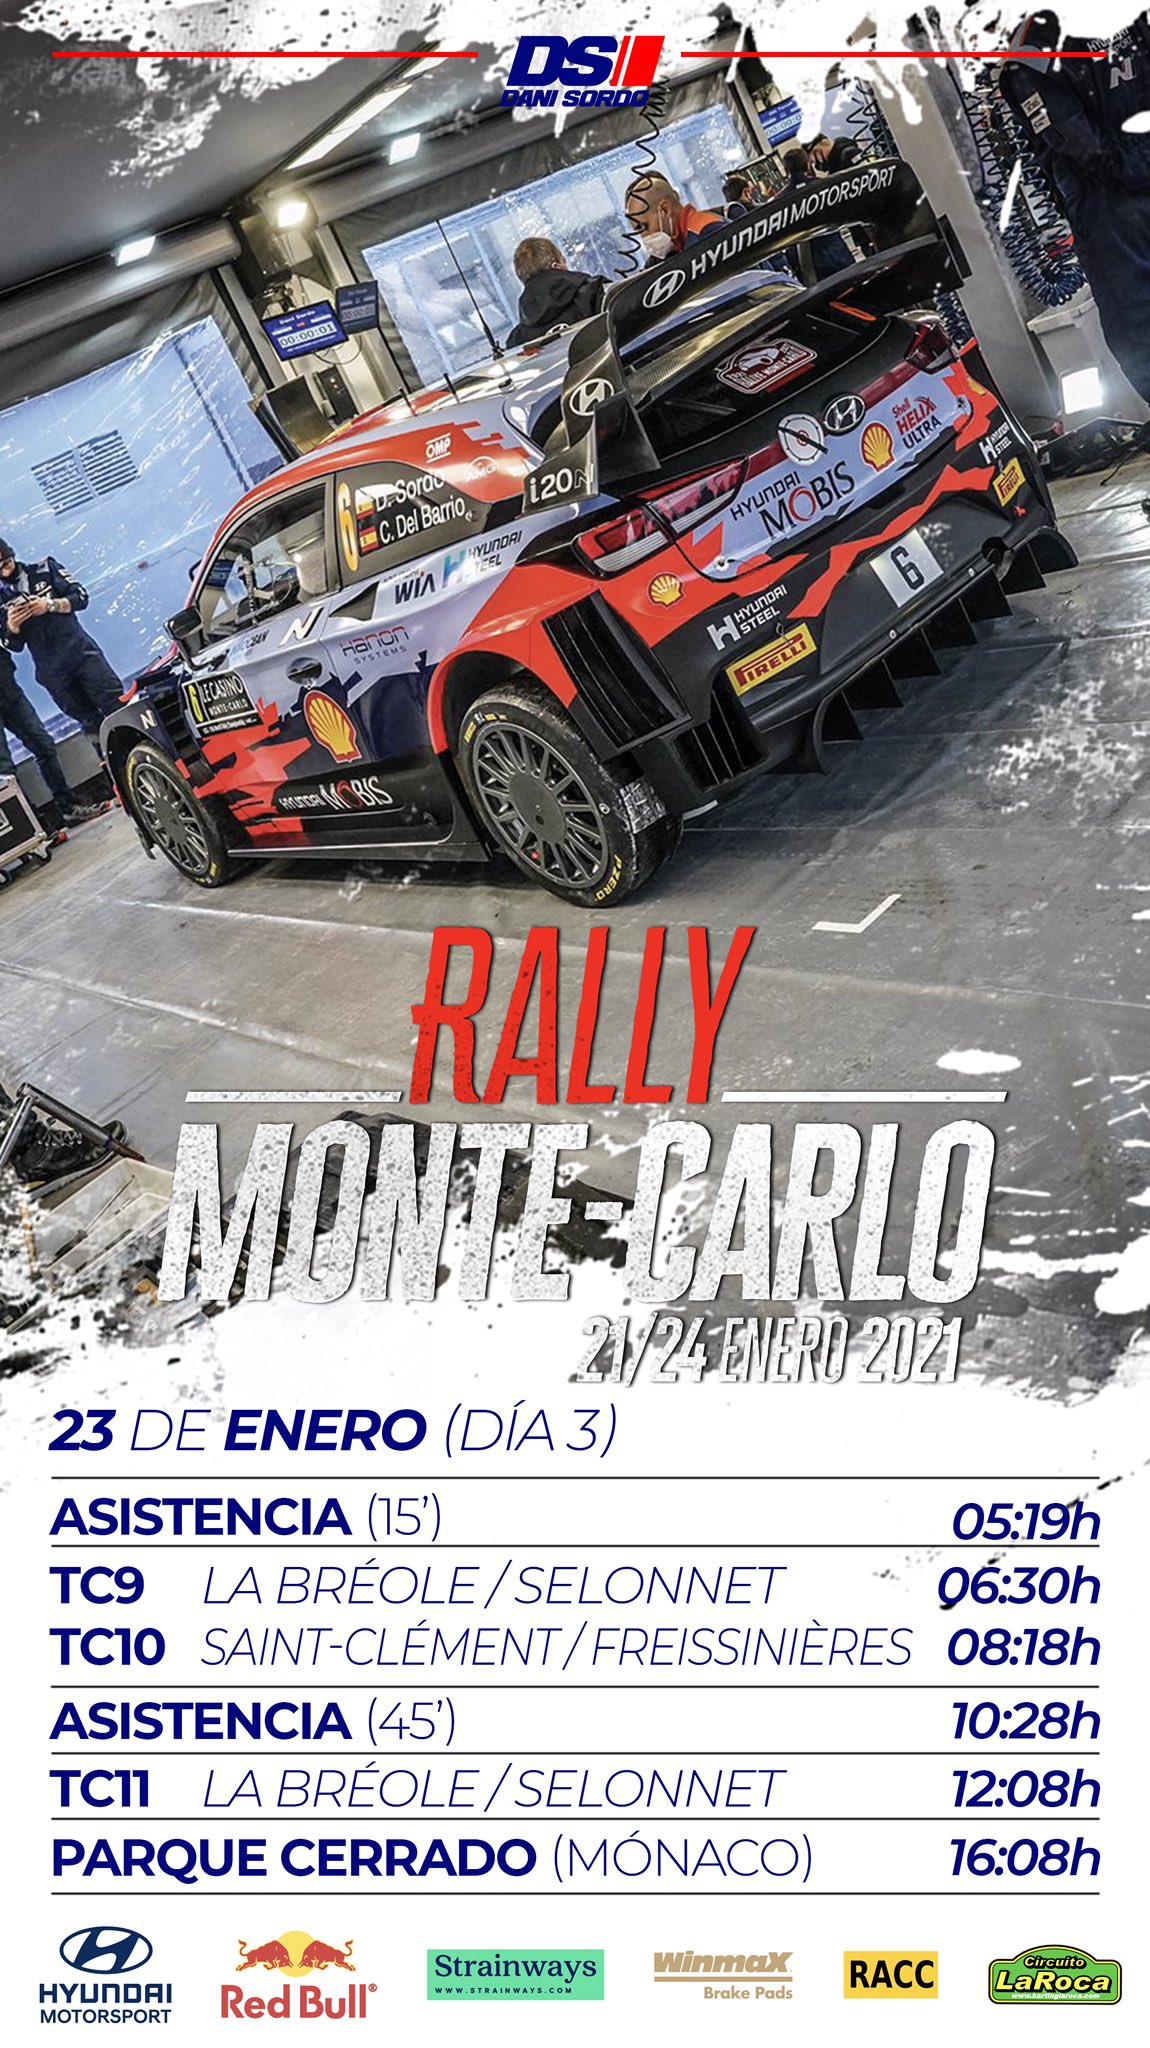 FabiaRally2 - WRC: 89º Rallye Automobile de Monte-Carlo [18-24 Enero] - Página 9 EsY-9MMXMAYHysf?format=jpg&name=large